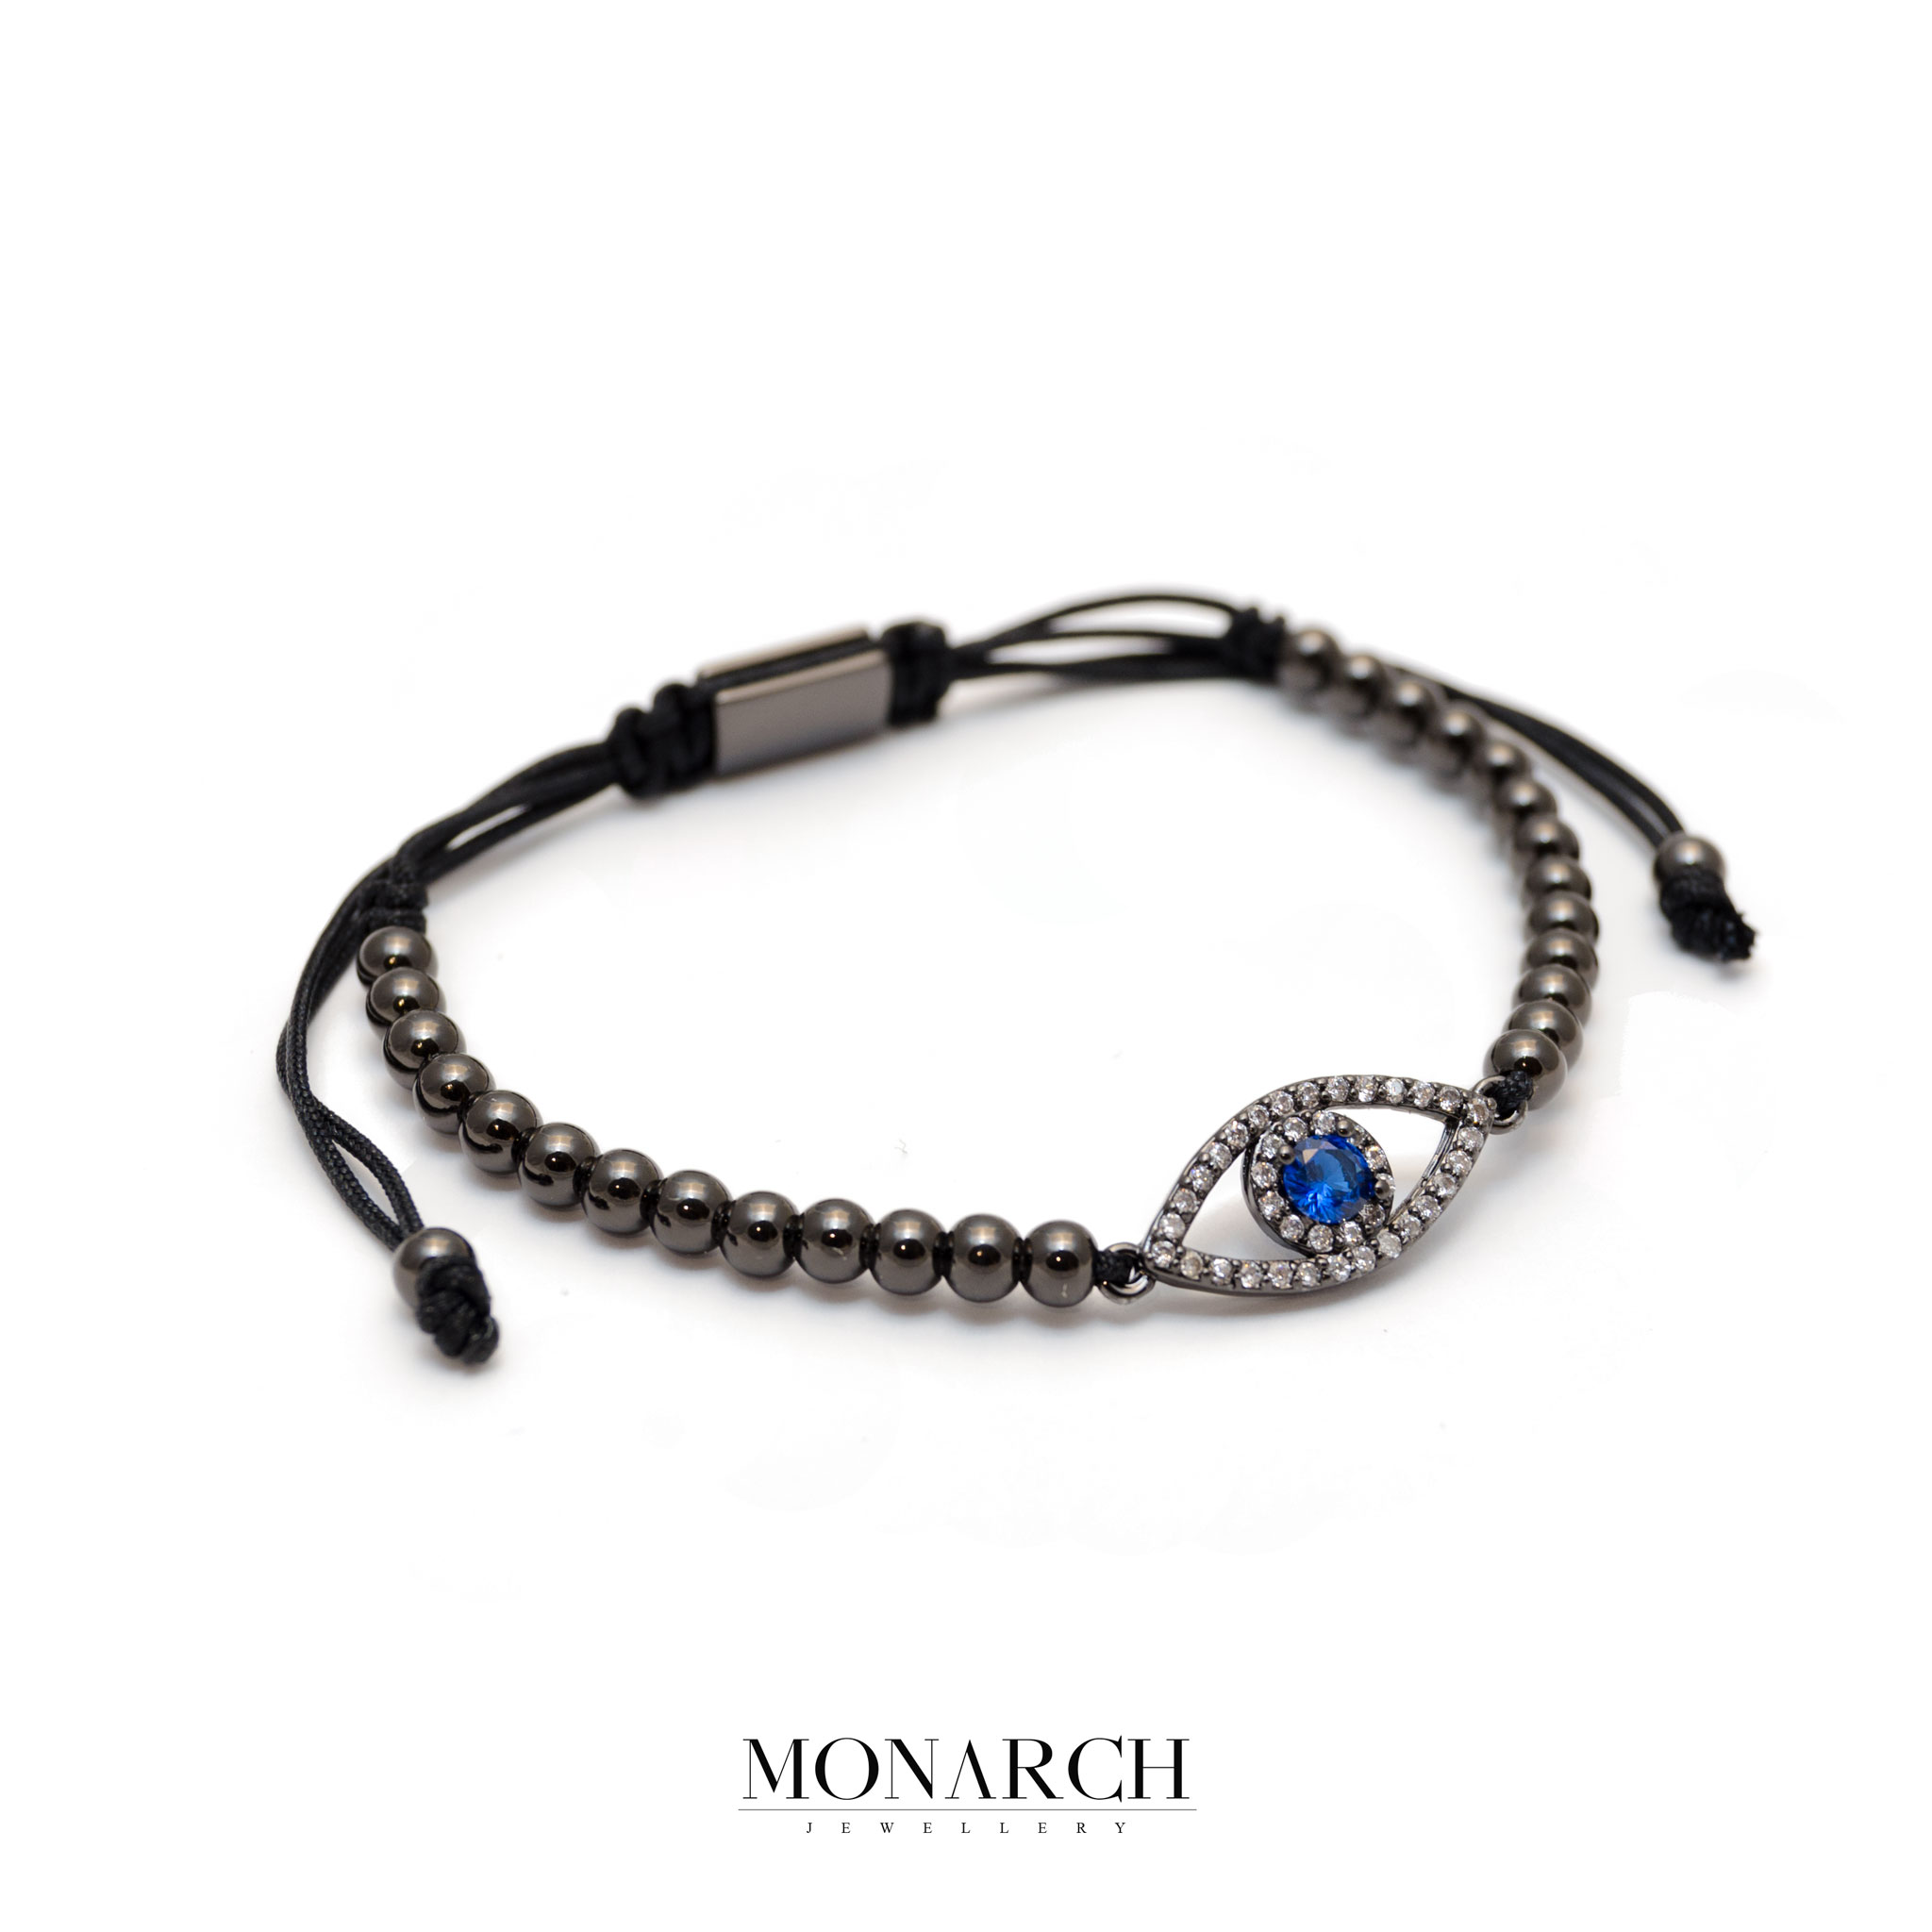 Monarch Jewellery Black Fatima Eye Charm Macrame Bracelet